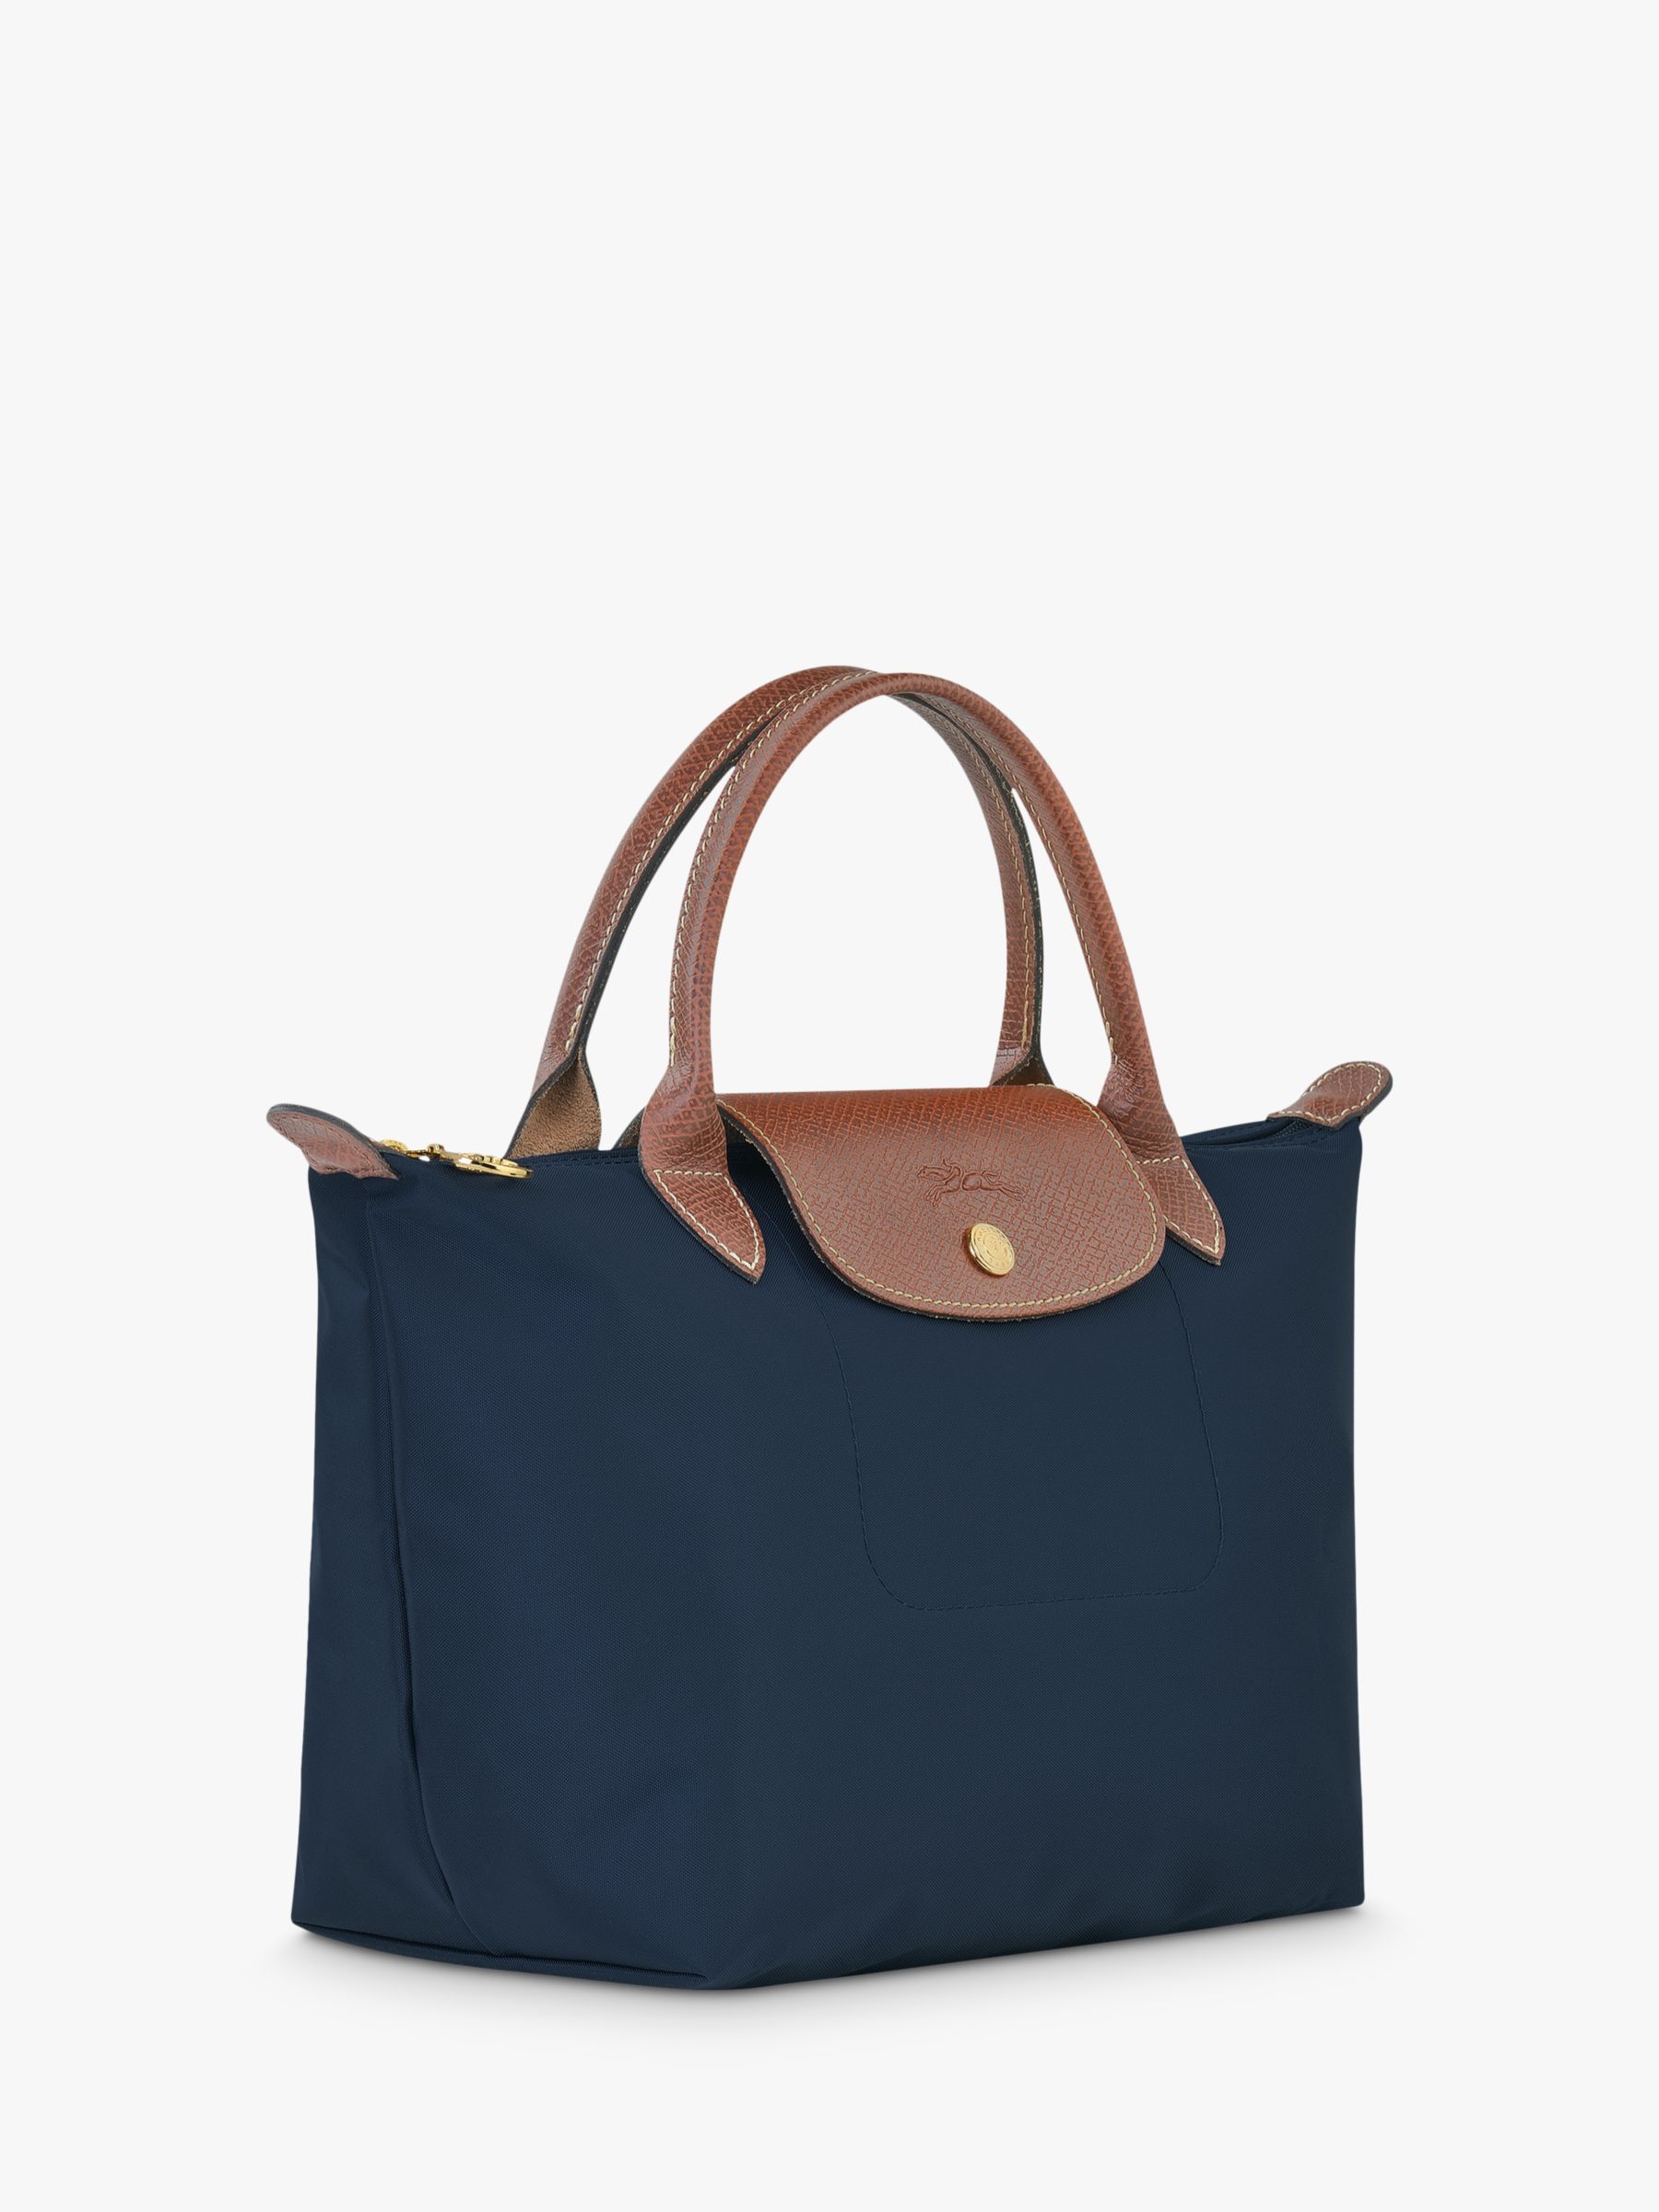 Longchamp Le Pliage Small Size Comparison  Small Top Handle VS Small Long  Handle Bags 